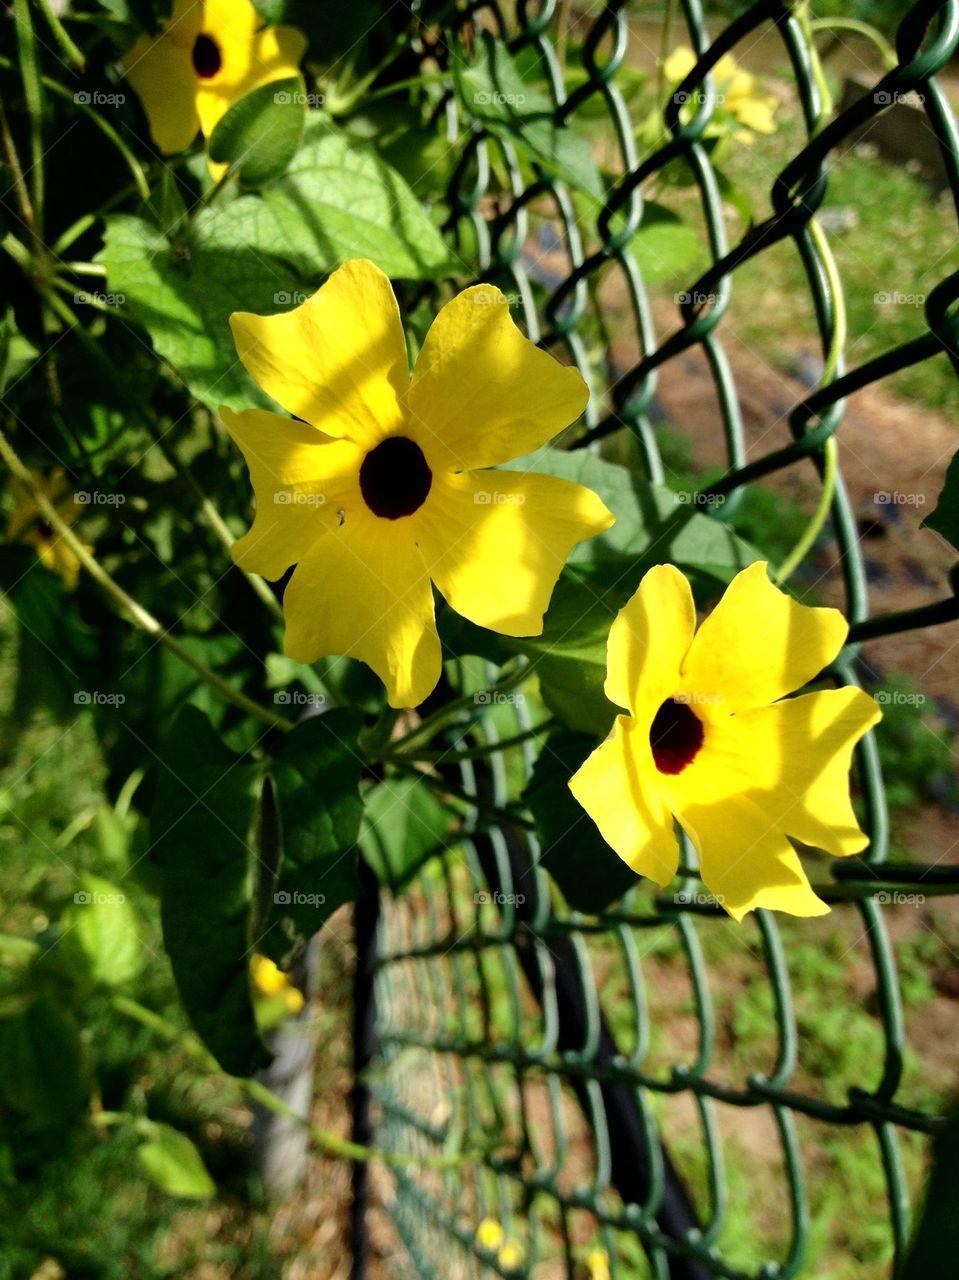 Foap.com: Yellow daisy style vine climbing chain link fence. stock